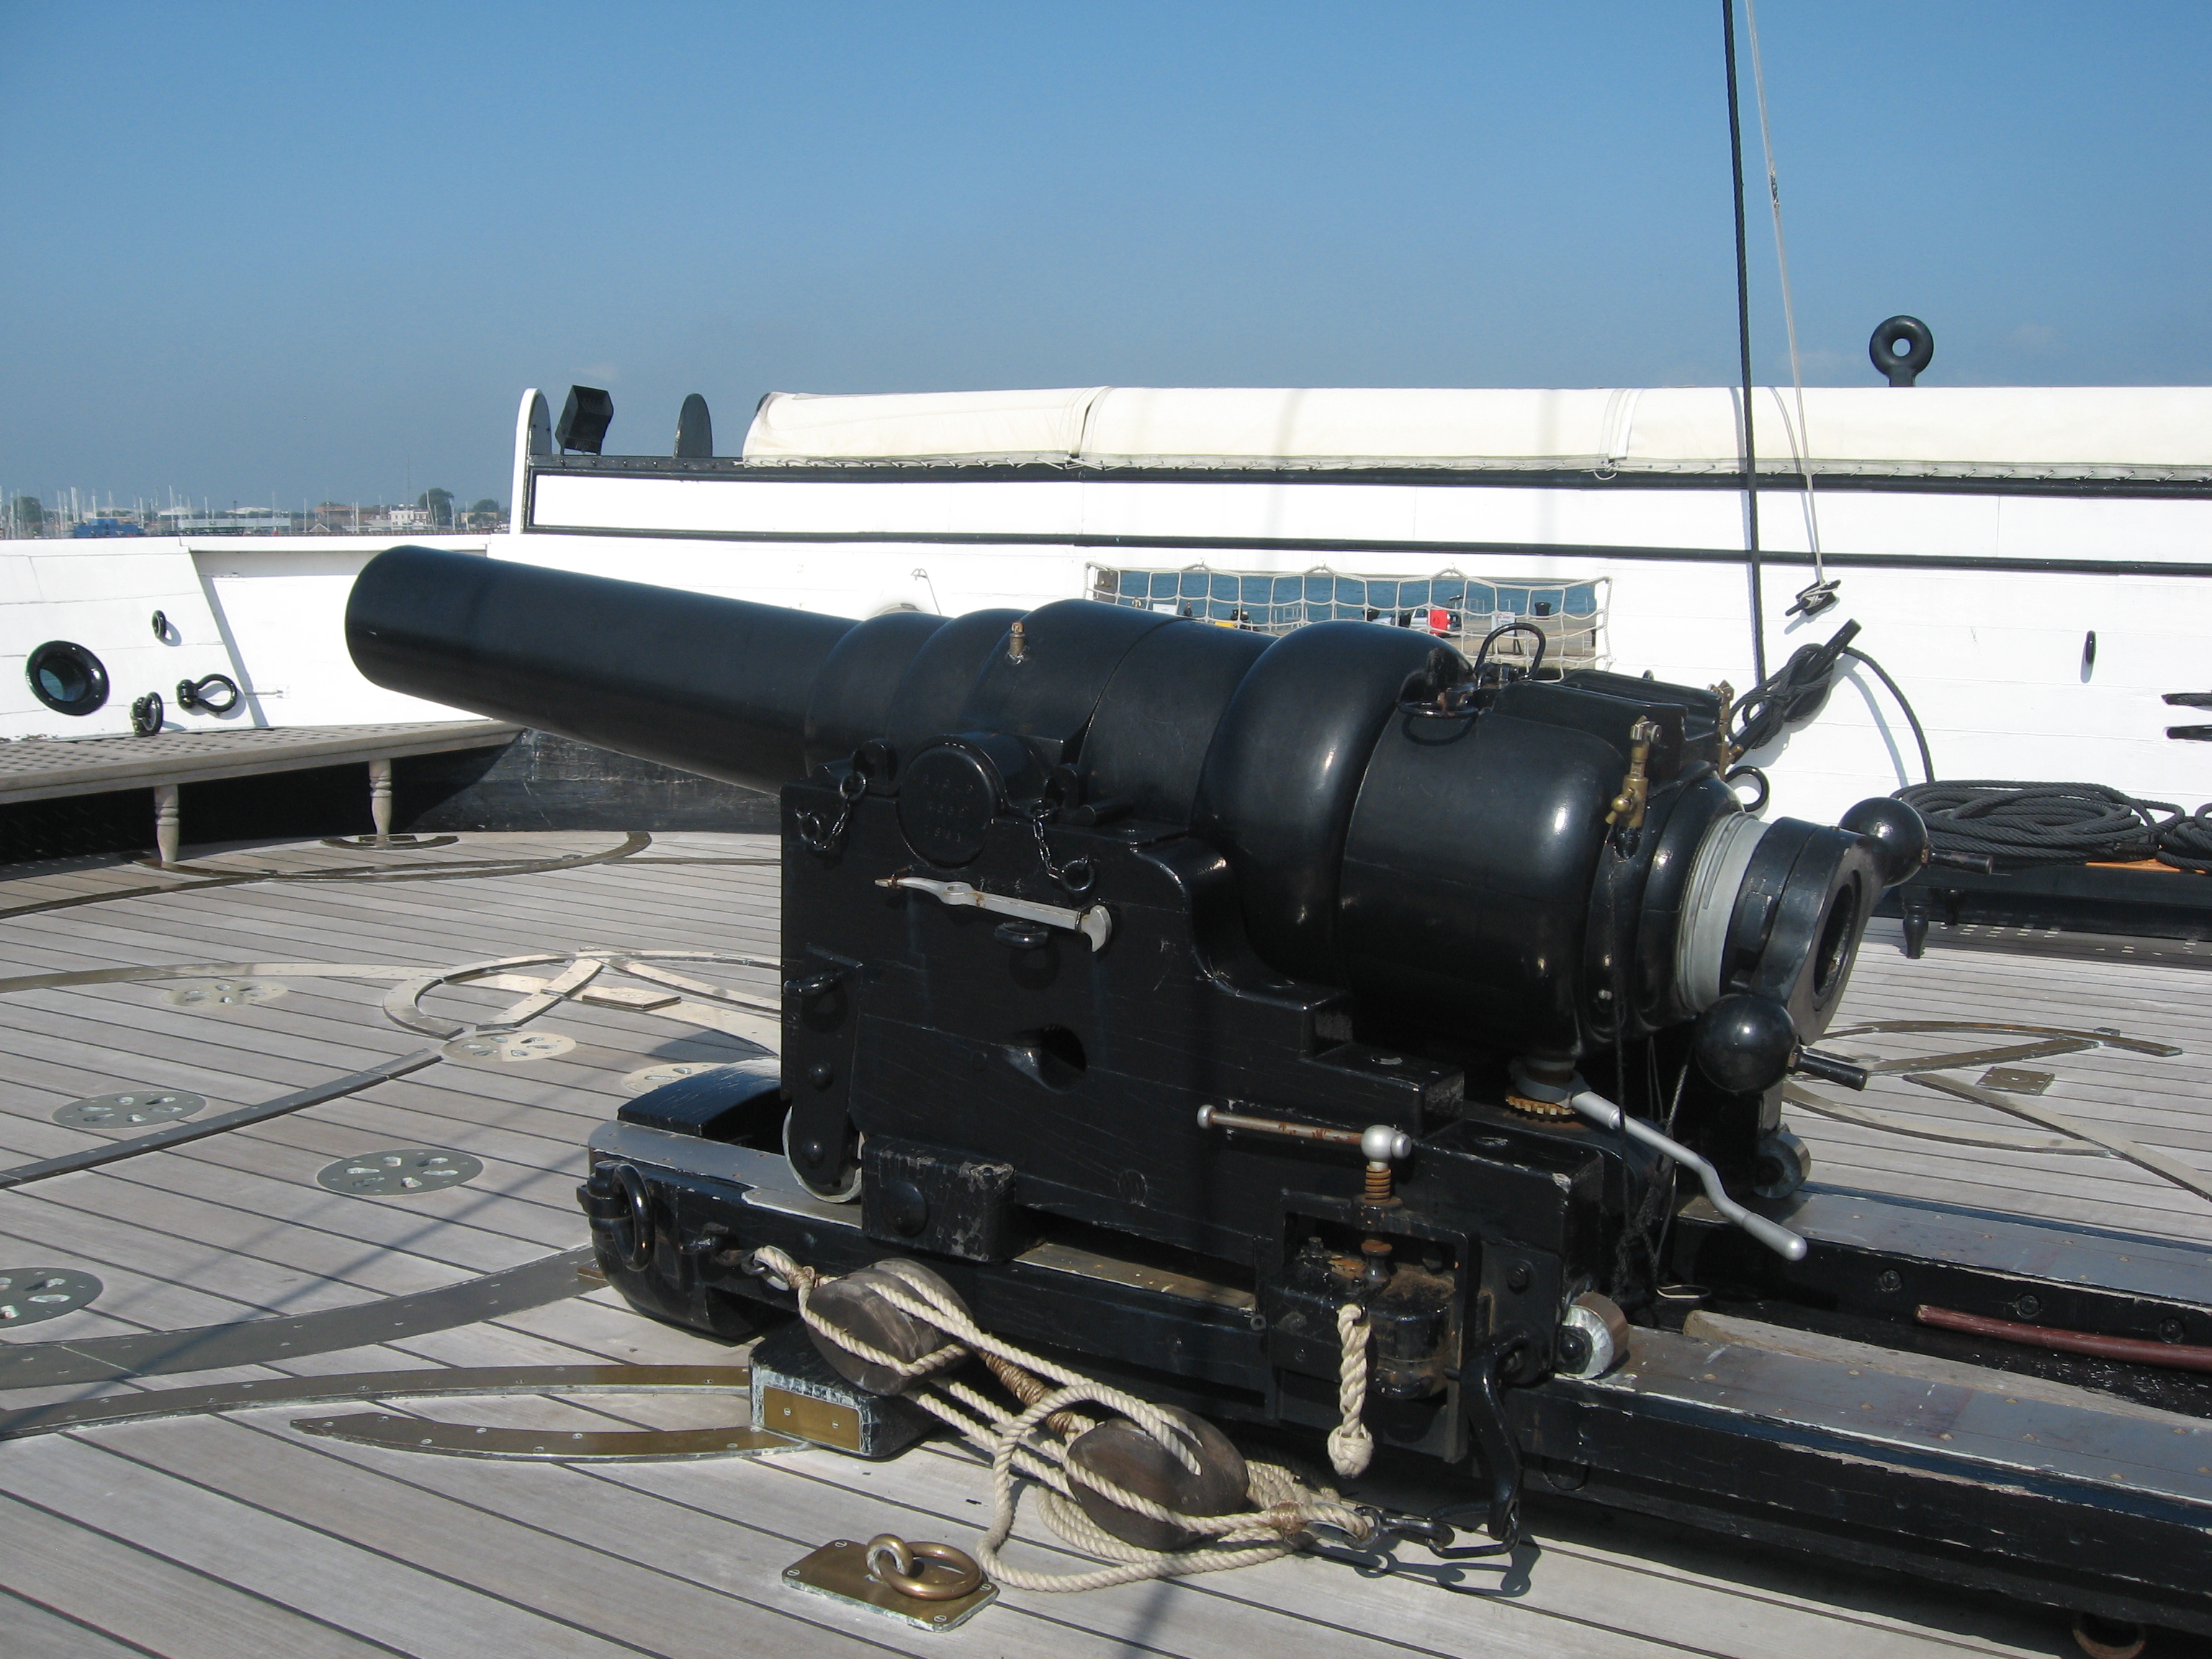 RBL_7_inch_Armstrong_gun_HMS_Warrior_left_side.jpg